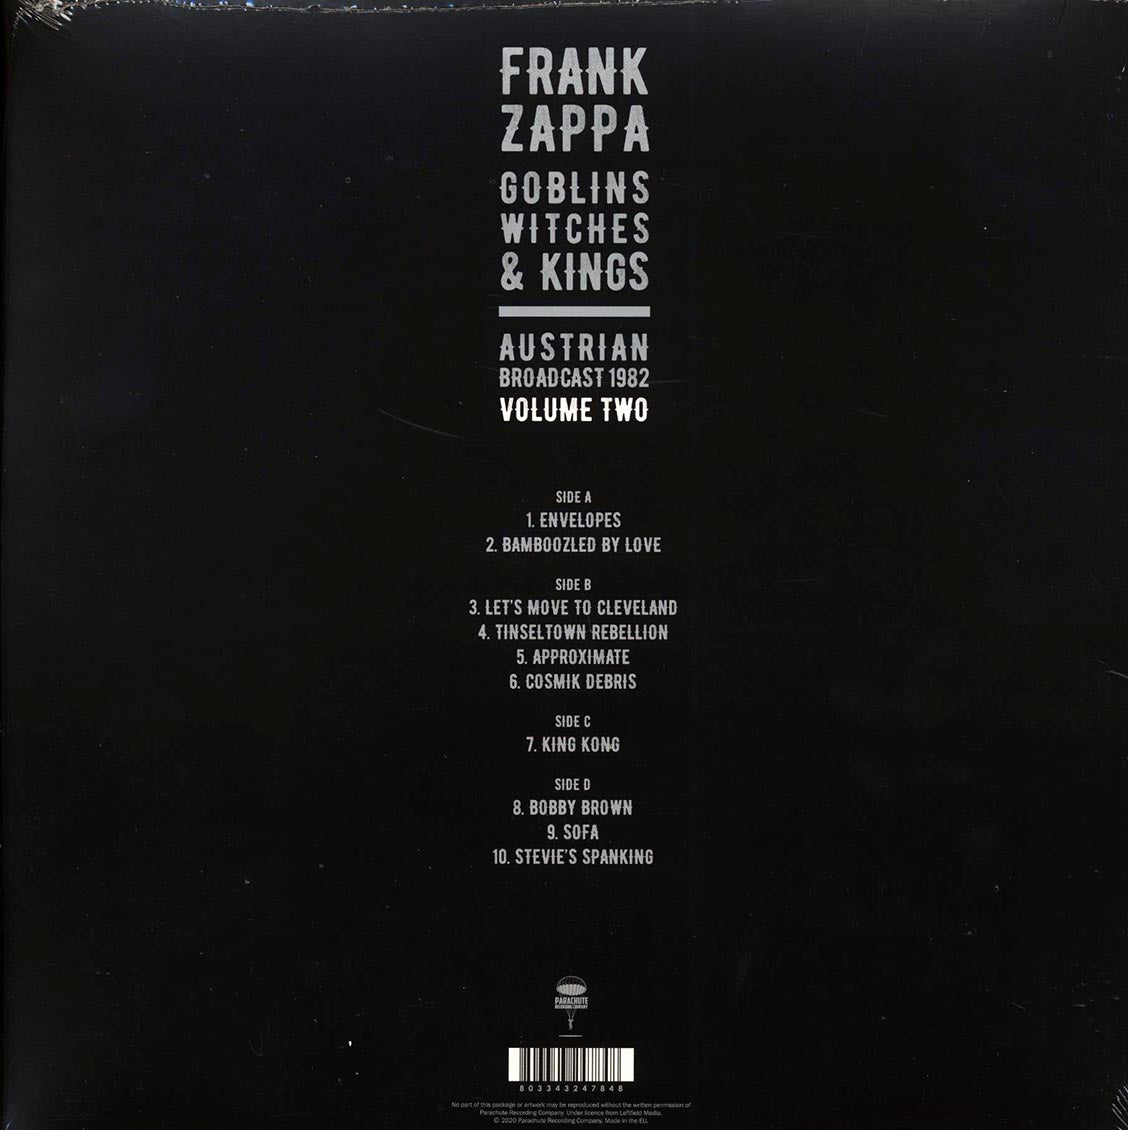 Frank Zappa - Goblins Witches & Kings Volume 2: Austrian Broadcast 1982 (2xLP) - Vinyl LP, LP